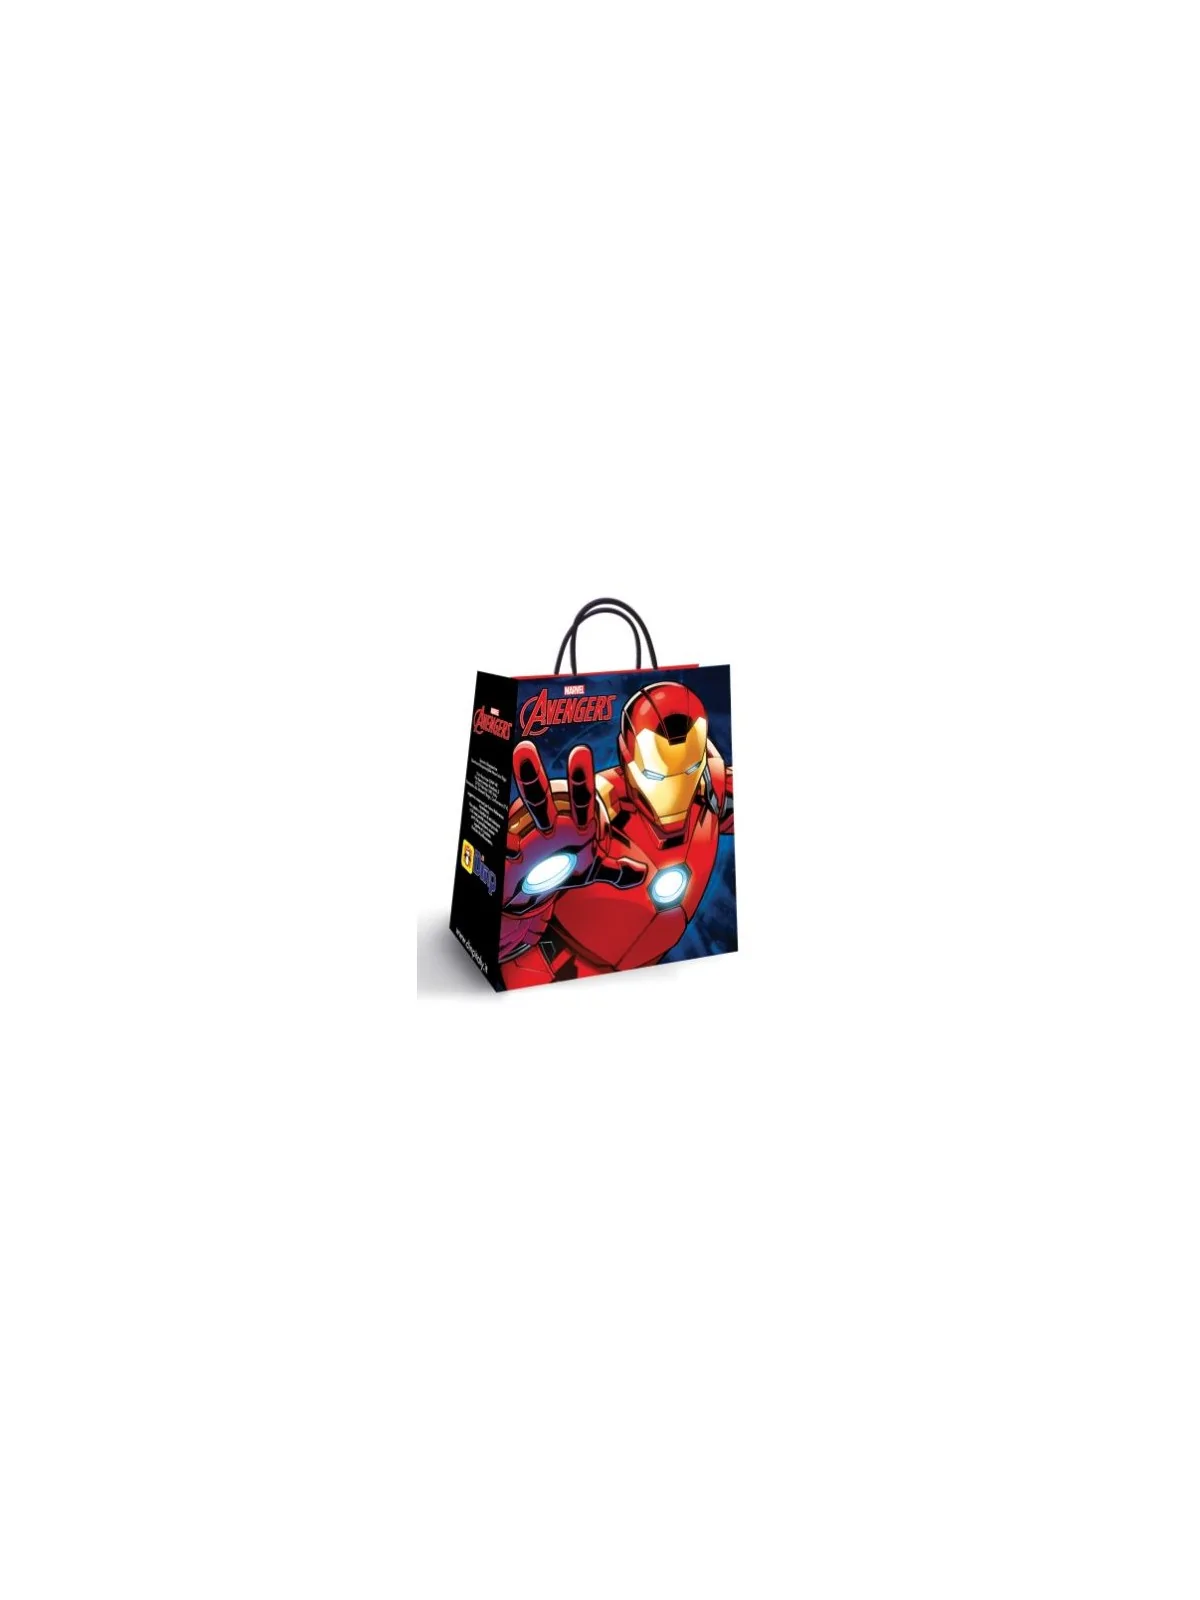 Avengers Mini Shopper Sorpresa